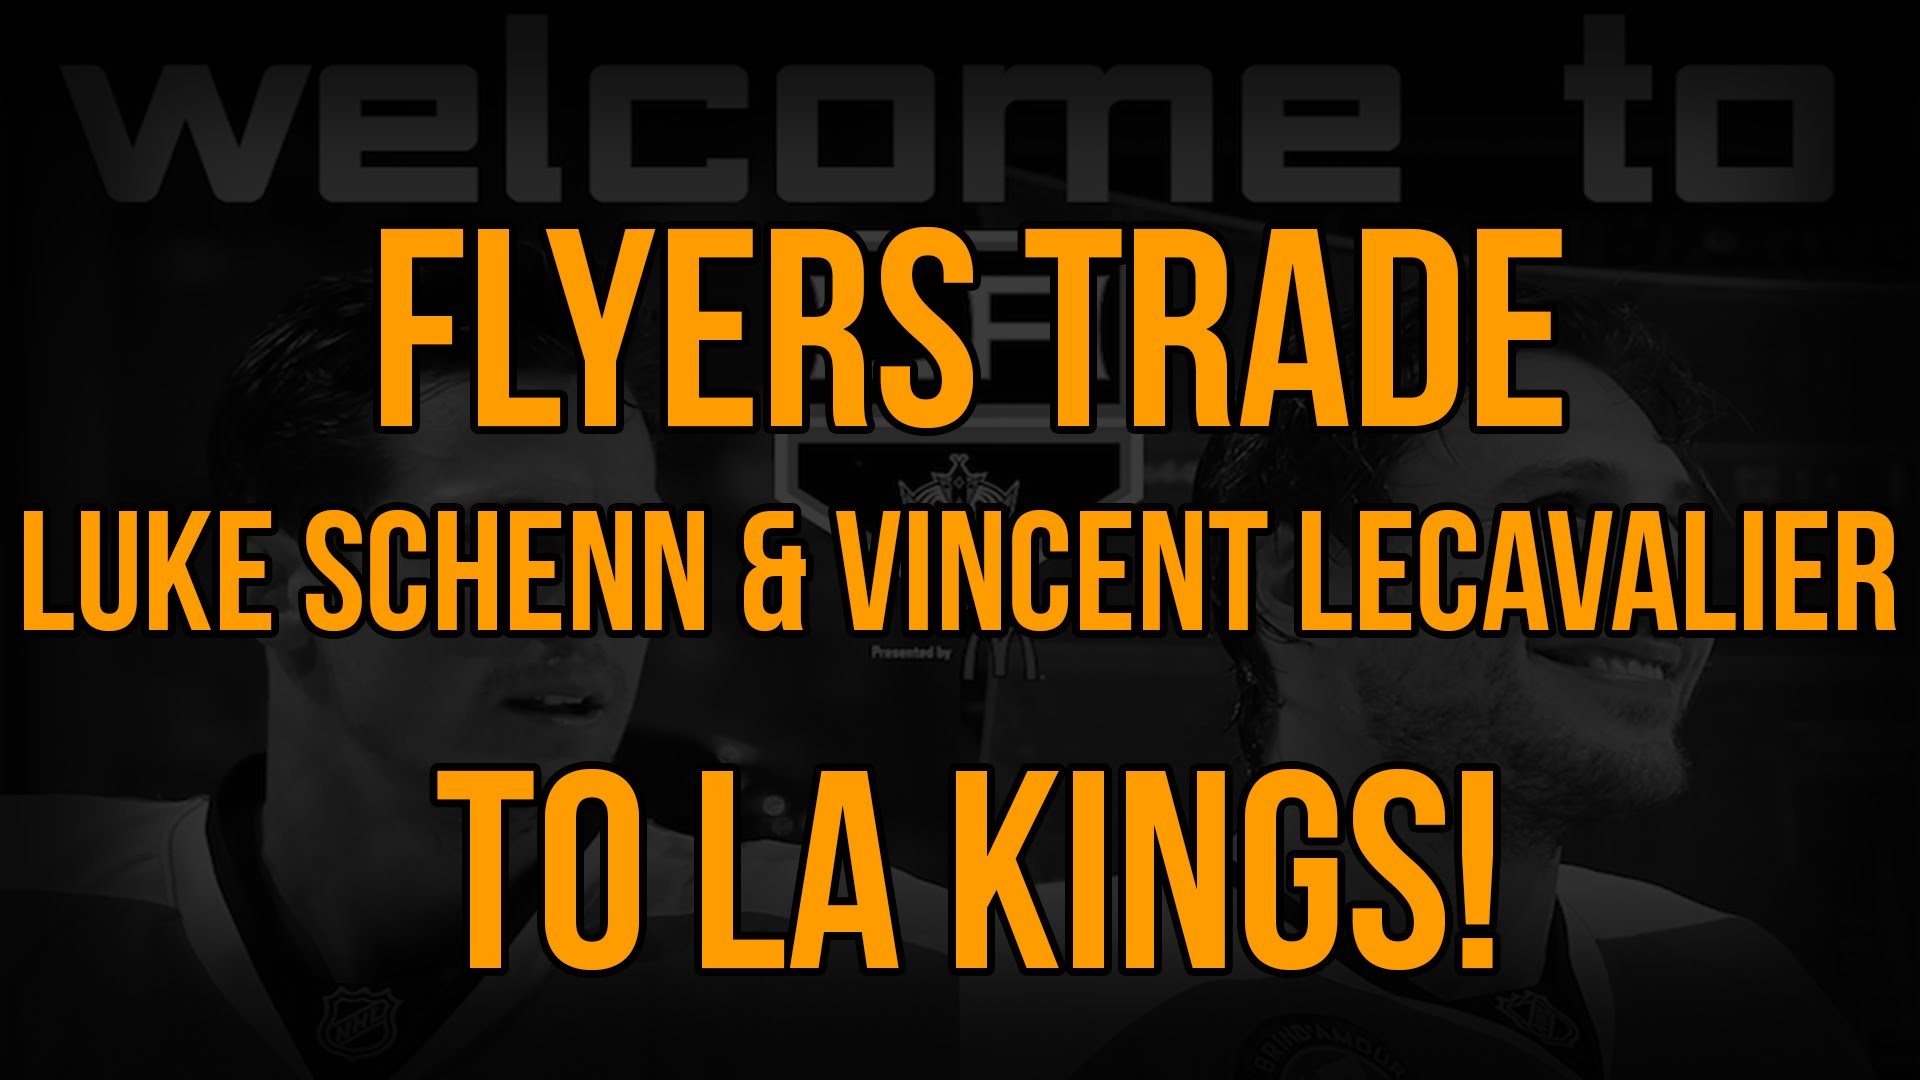 1920x1080 Philadelphia Flyers Trade Luke Schenn & Vincent Lecavalier to LA Kings